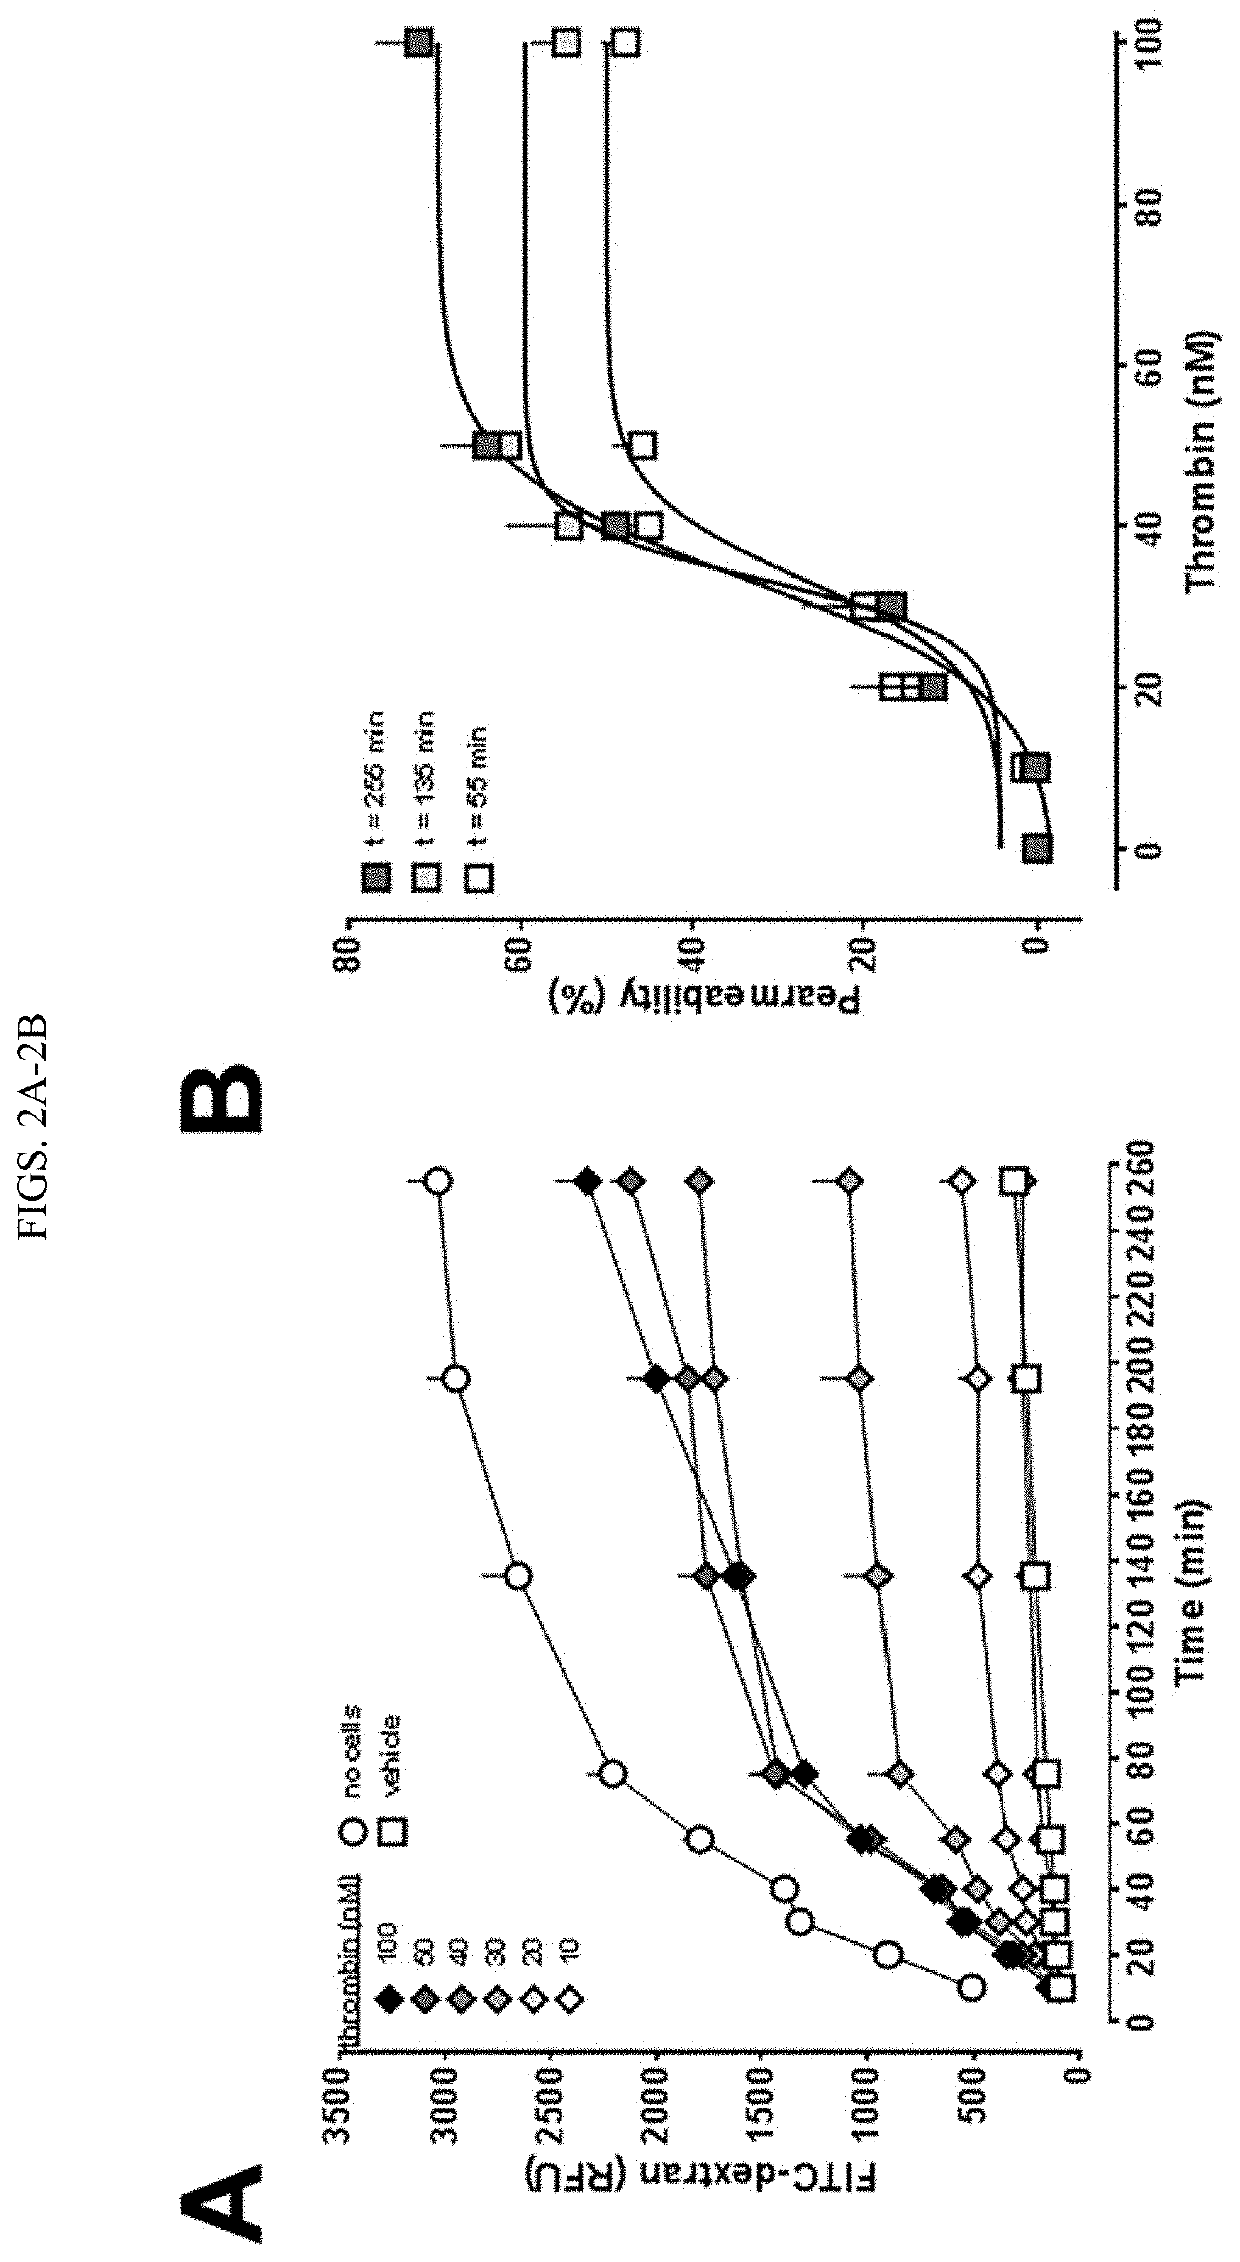 Methods of treating vascular leakage using cxcl12 peptides